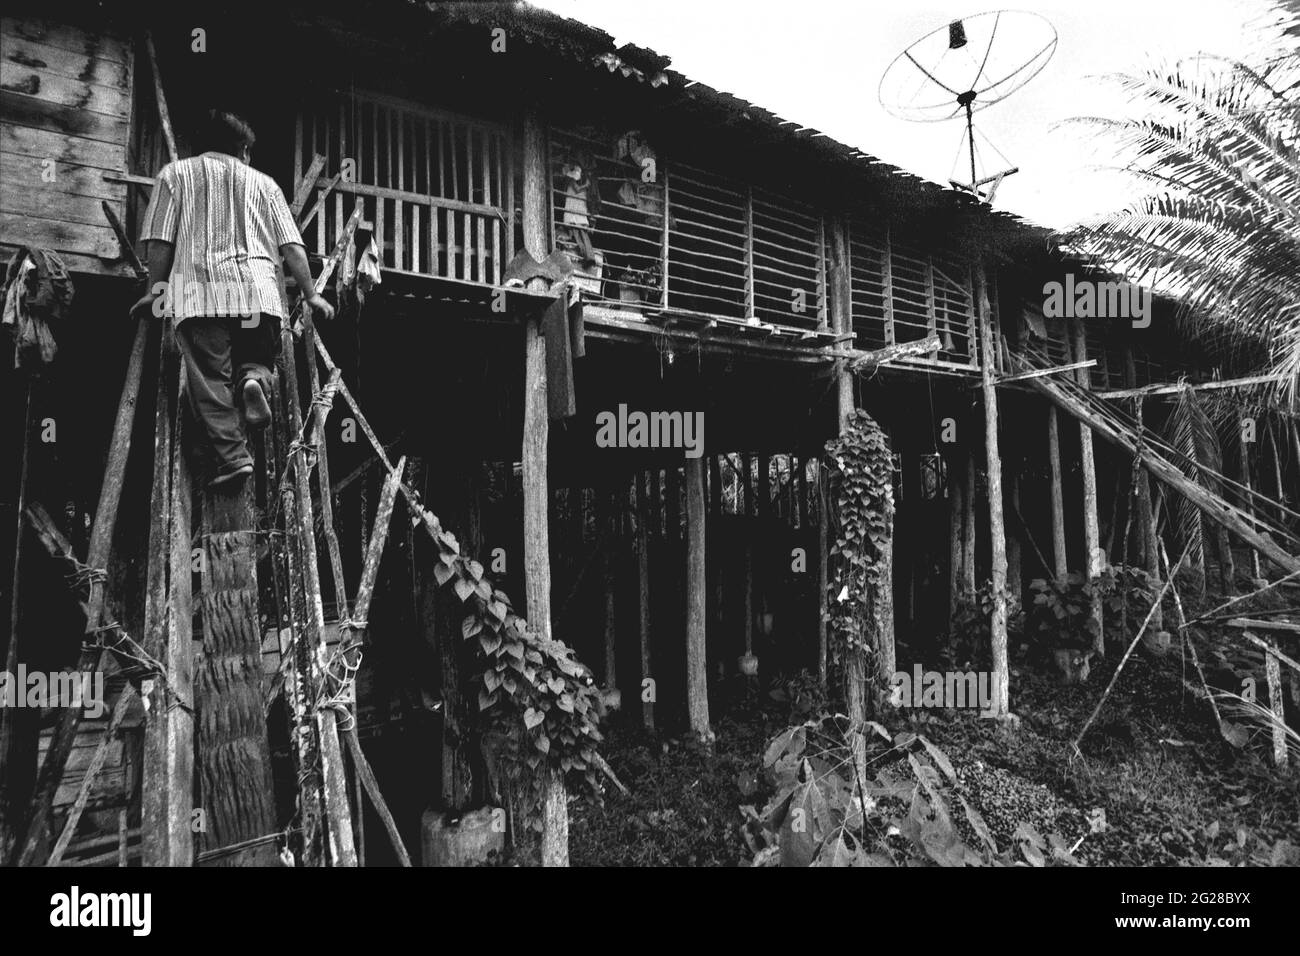 Dayak man Black and White Stock Photos & Images - Alamy